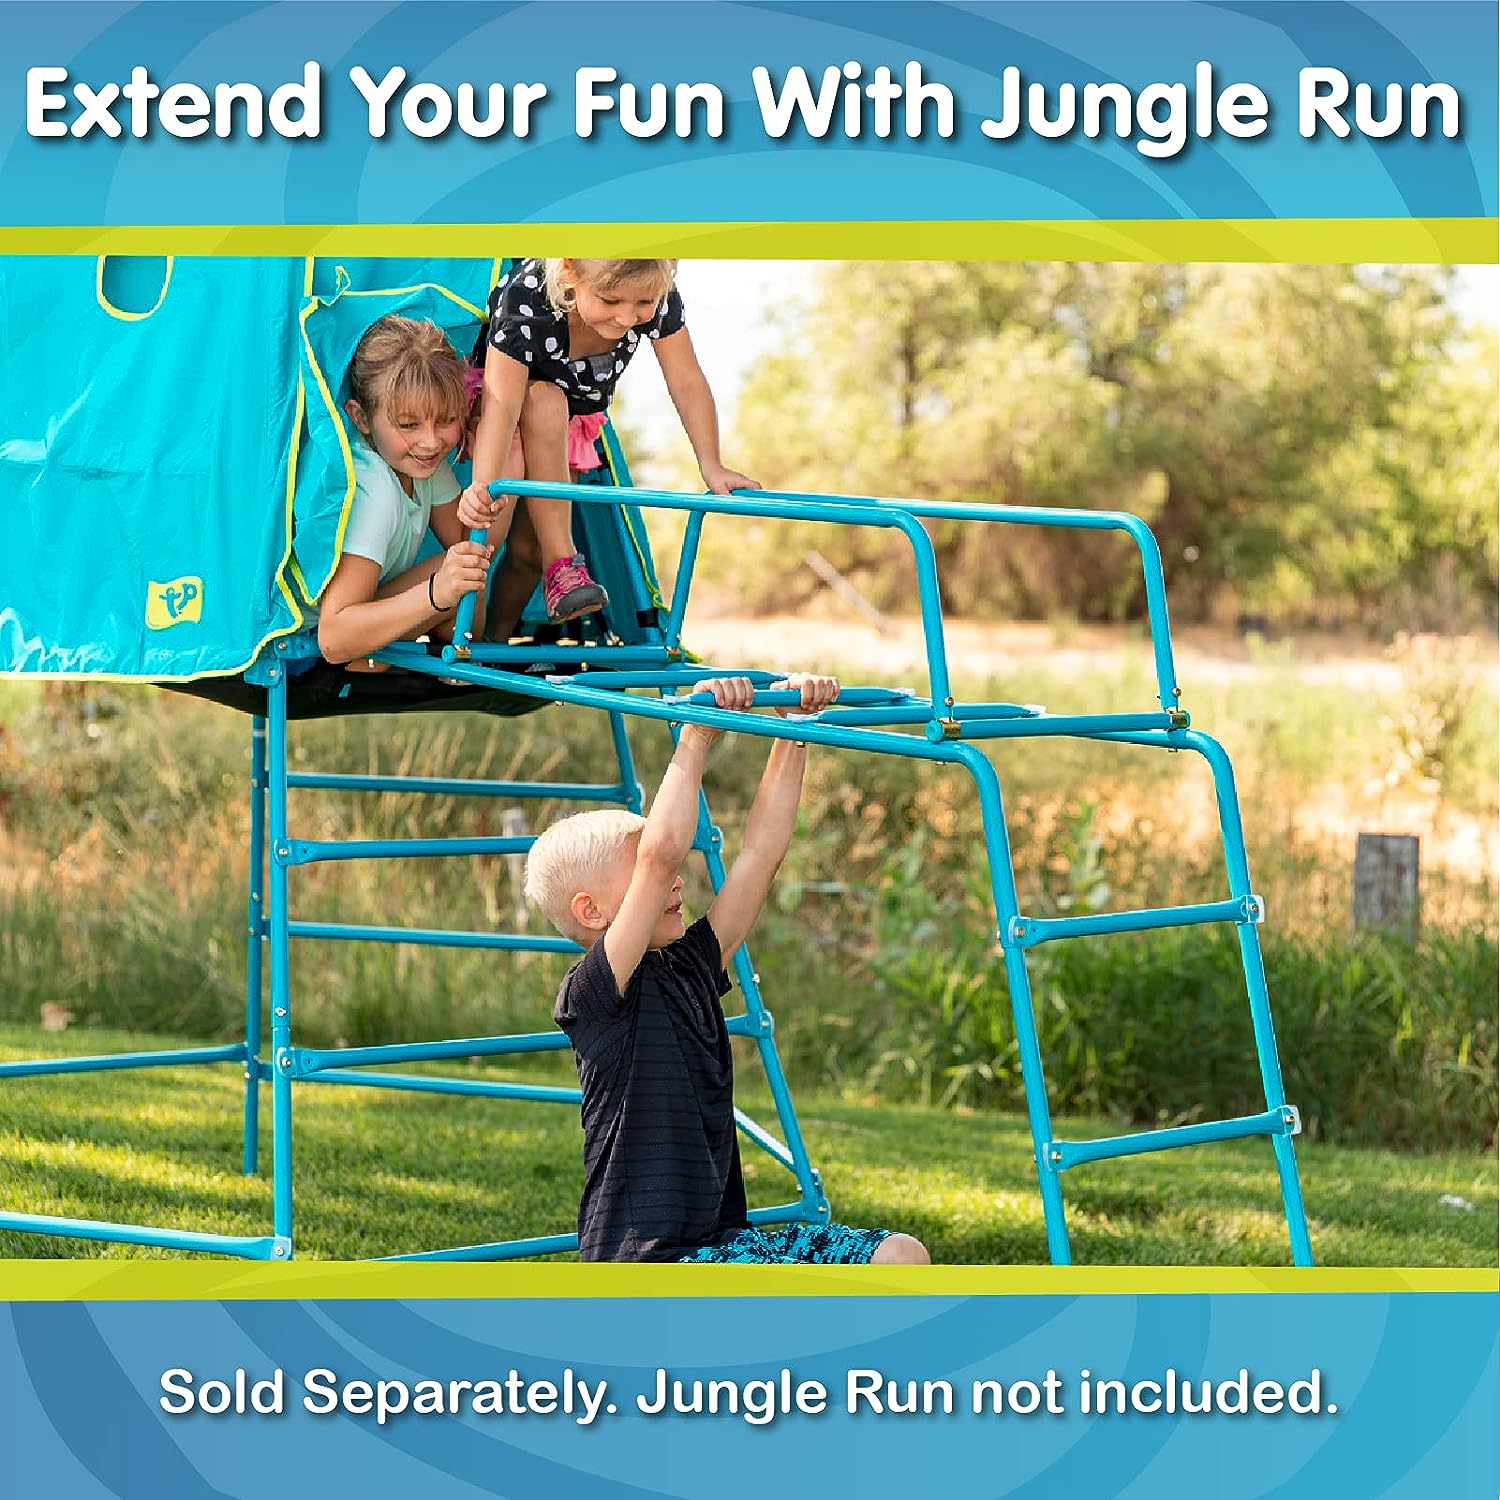 TP Toys Explorer 2 Climbing Set Jungle Gym with Platform and Tent, Blue - $200